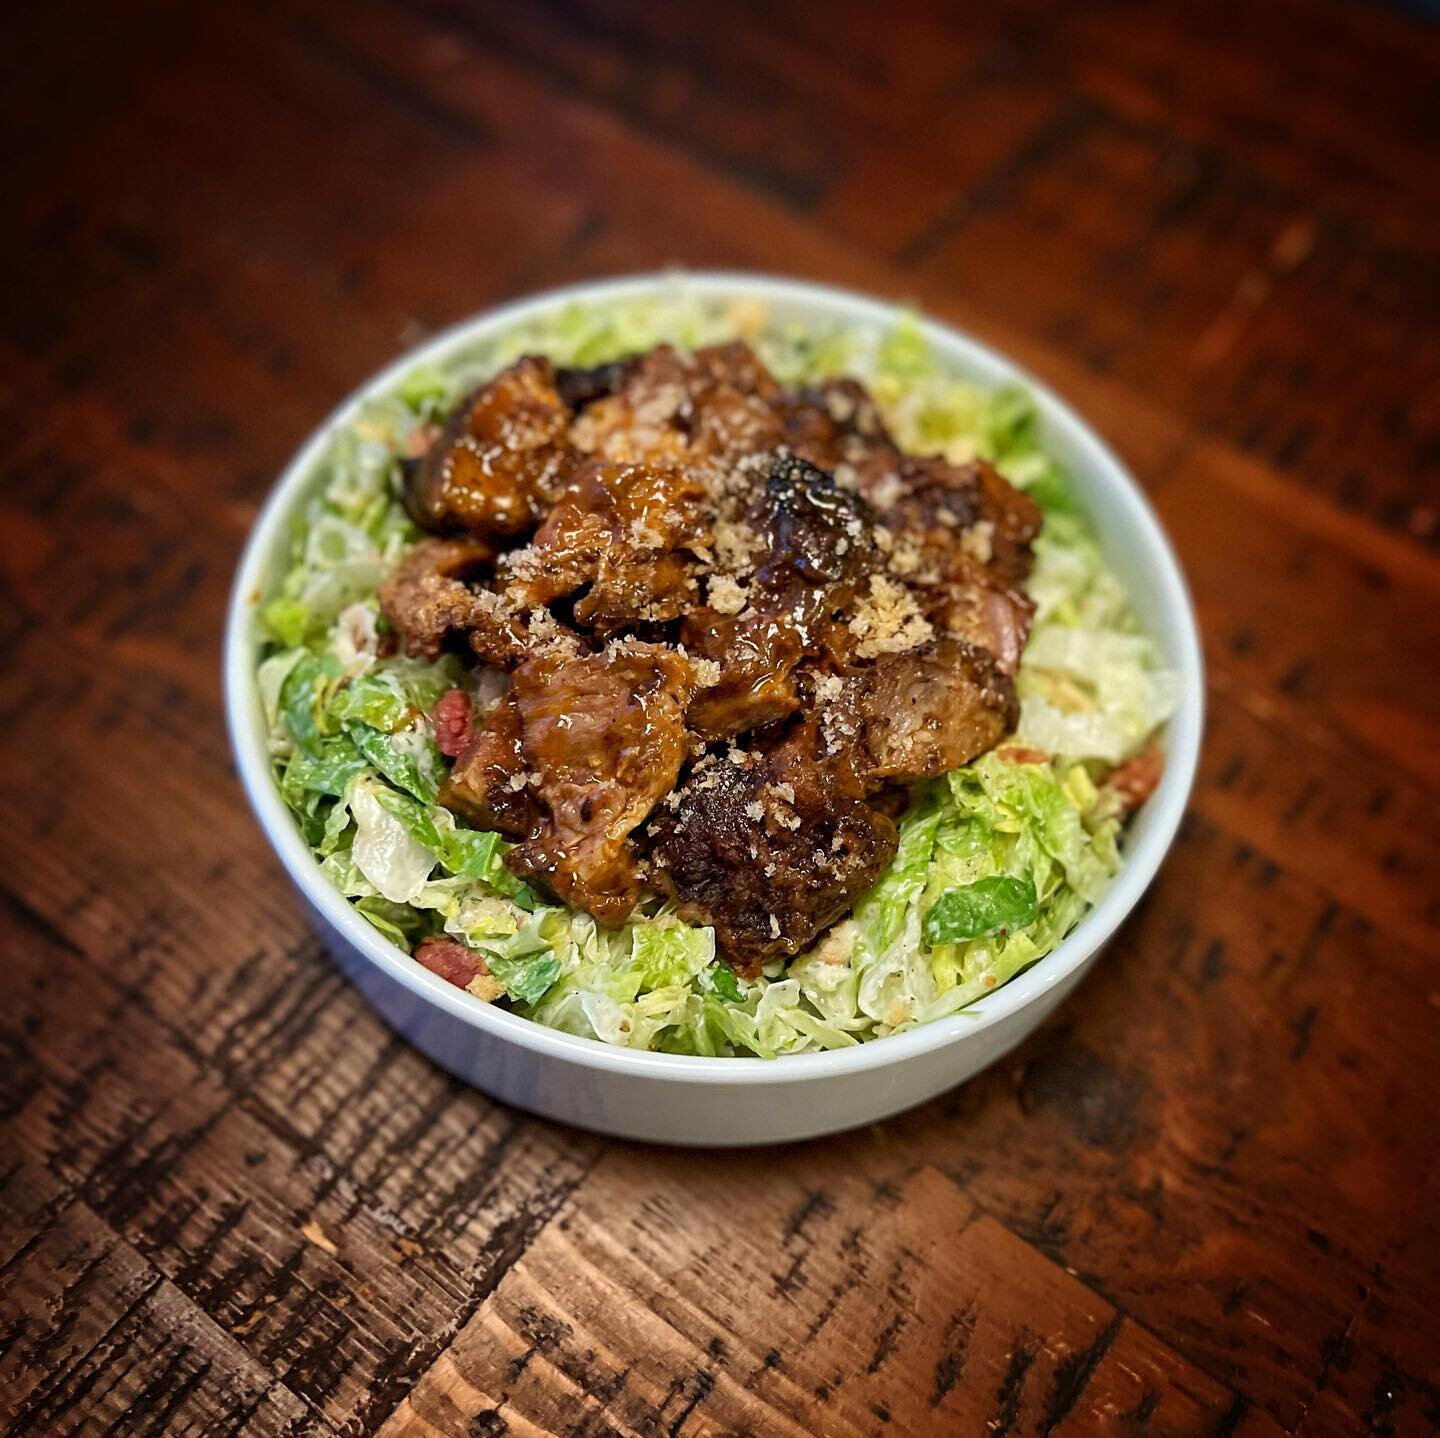 Amazing Jerk Pork Caesar Salad w/ Spicy Chicharr&oacute;n Crumble.
.
#asaladaday
.
.
. 
#instafood #yum #yummy #yumyum #delicious #eat #eatbetter #food #foodporn #dinnerforone #hot #jerkpork #pork #love #sharefood #salad #delicious #eating #foodpic #